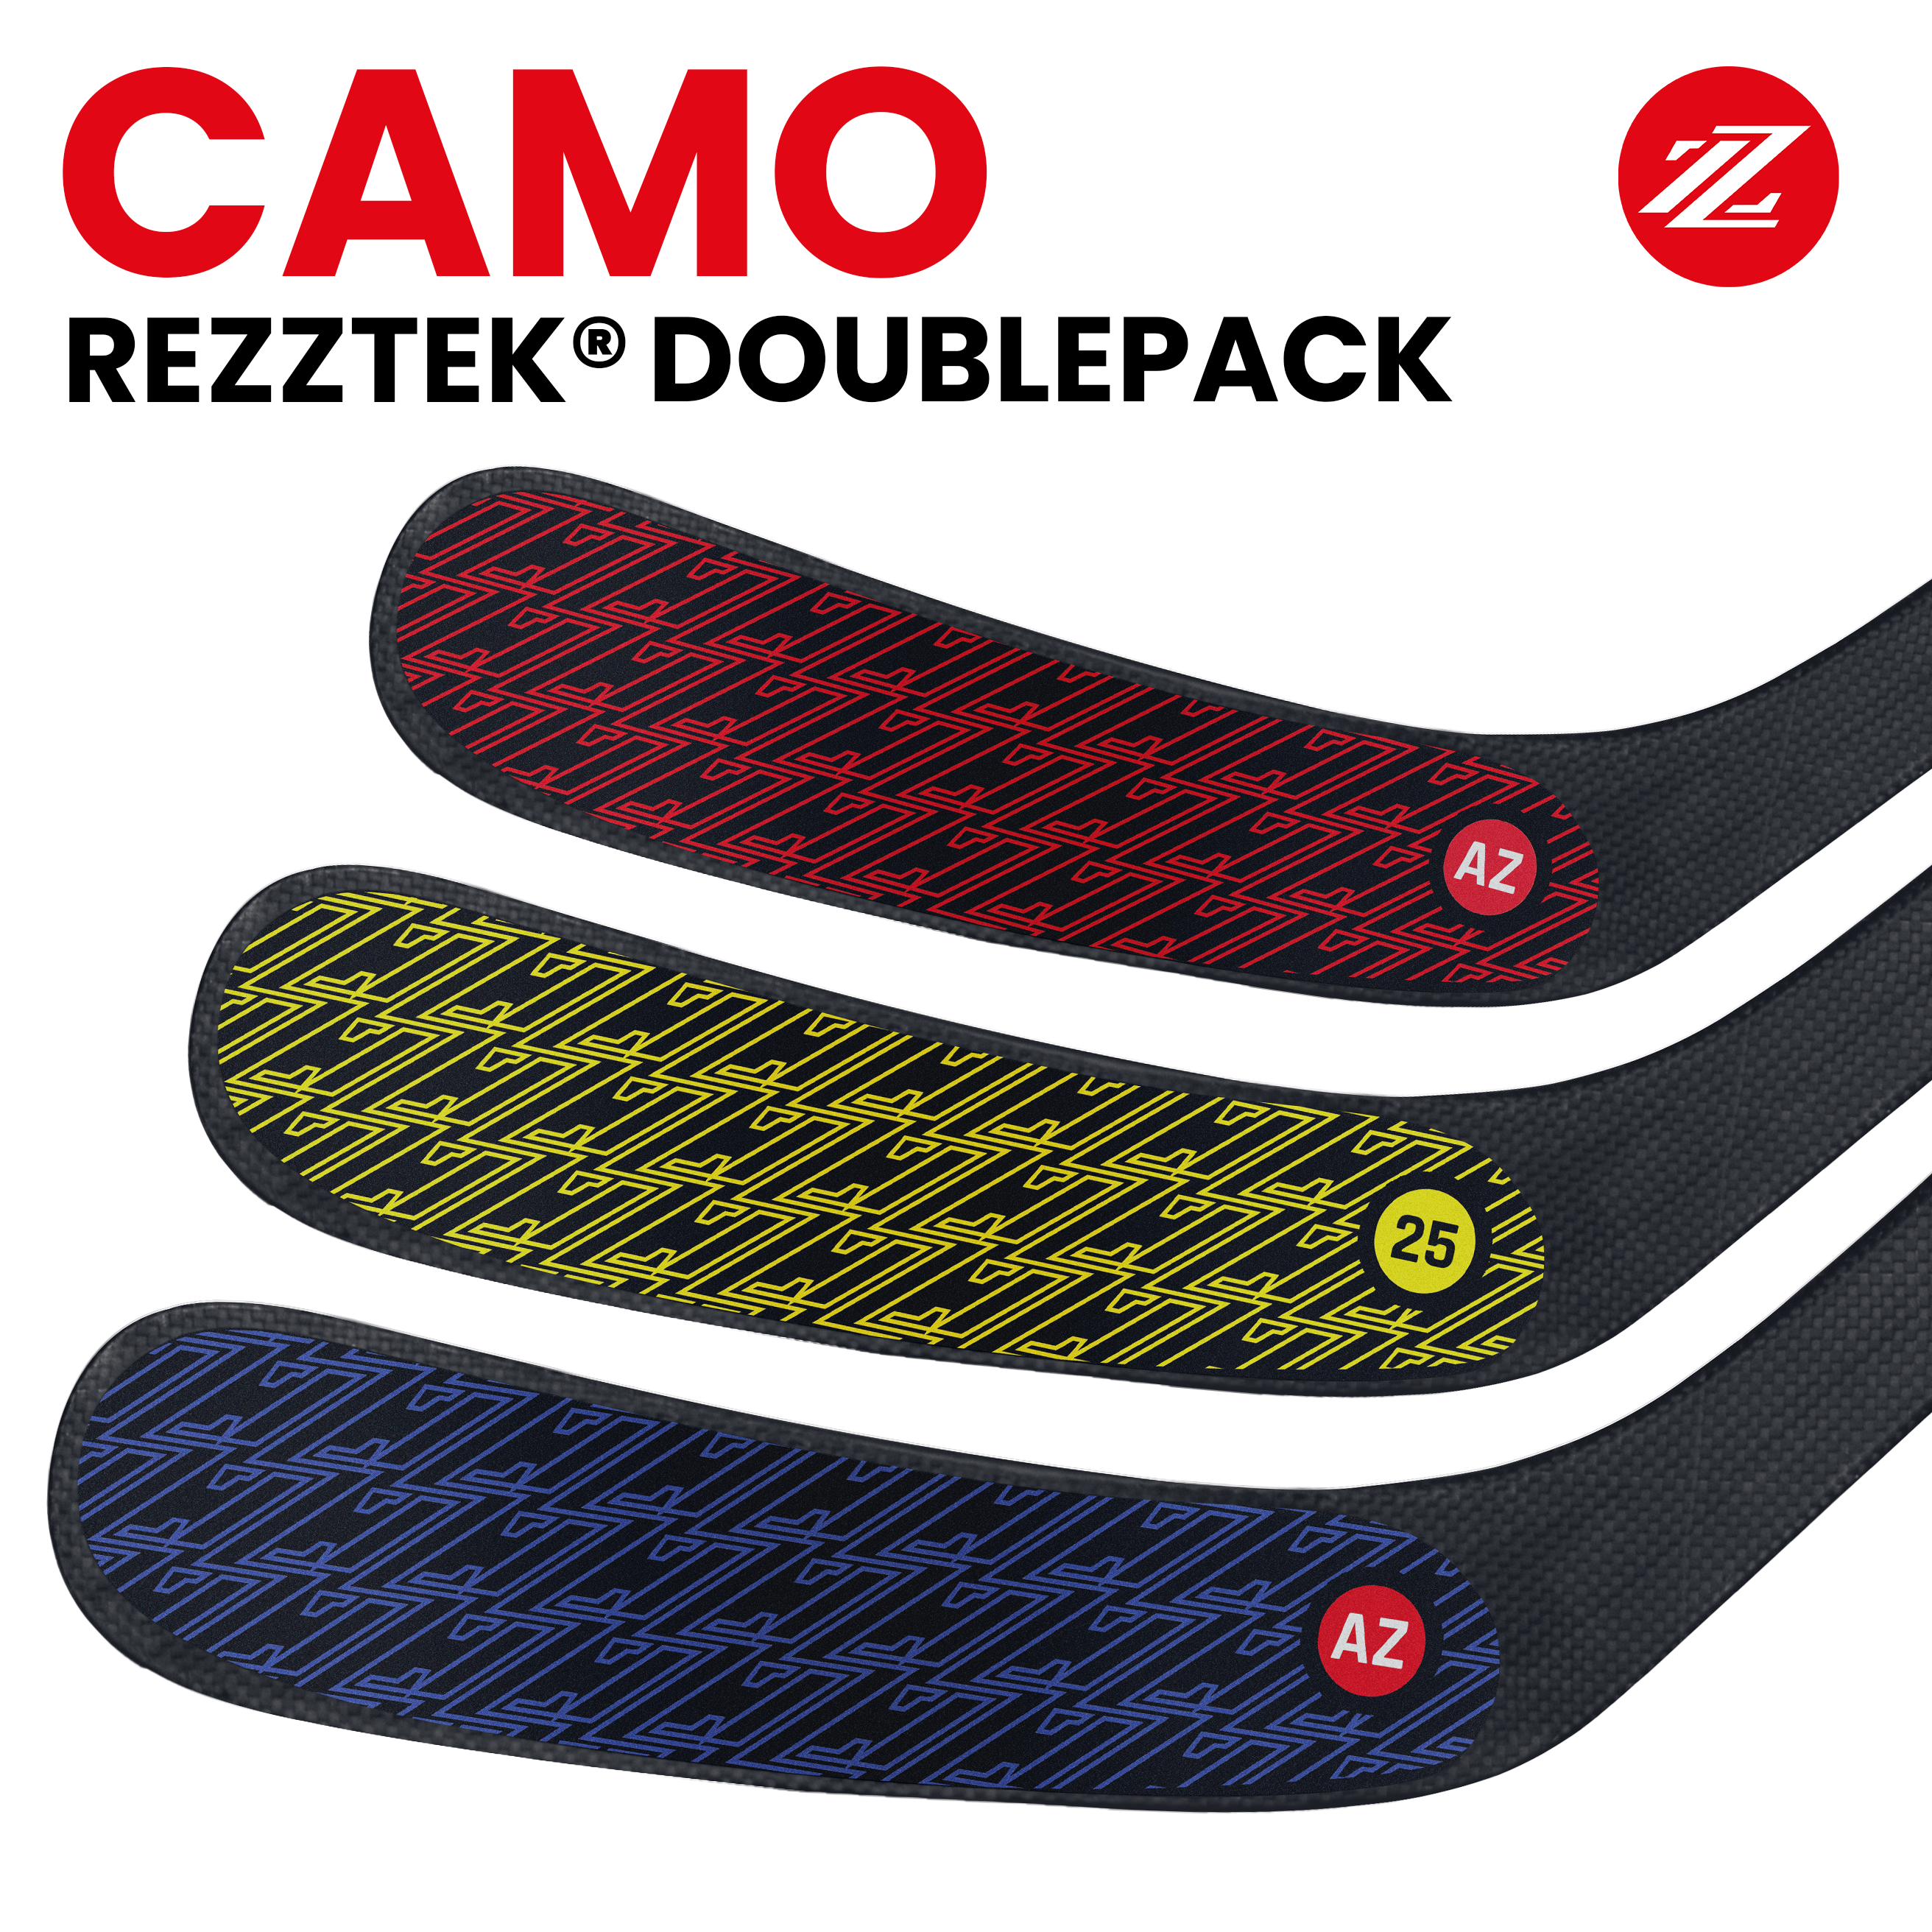 Camo Rezztek® Doublepack Blade Grip